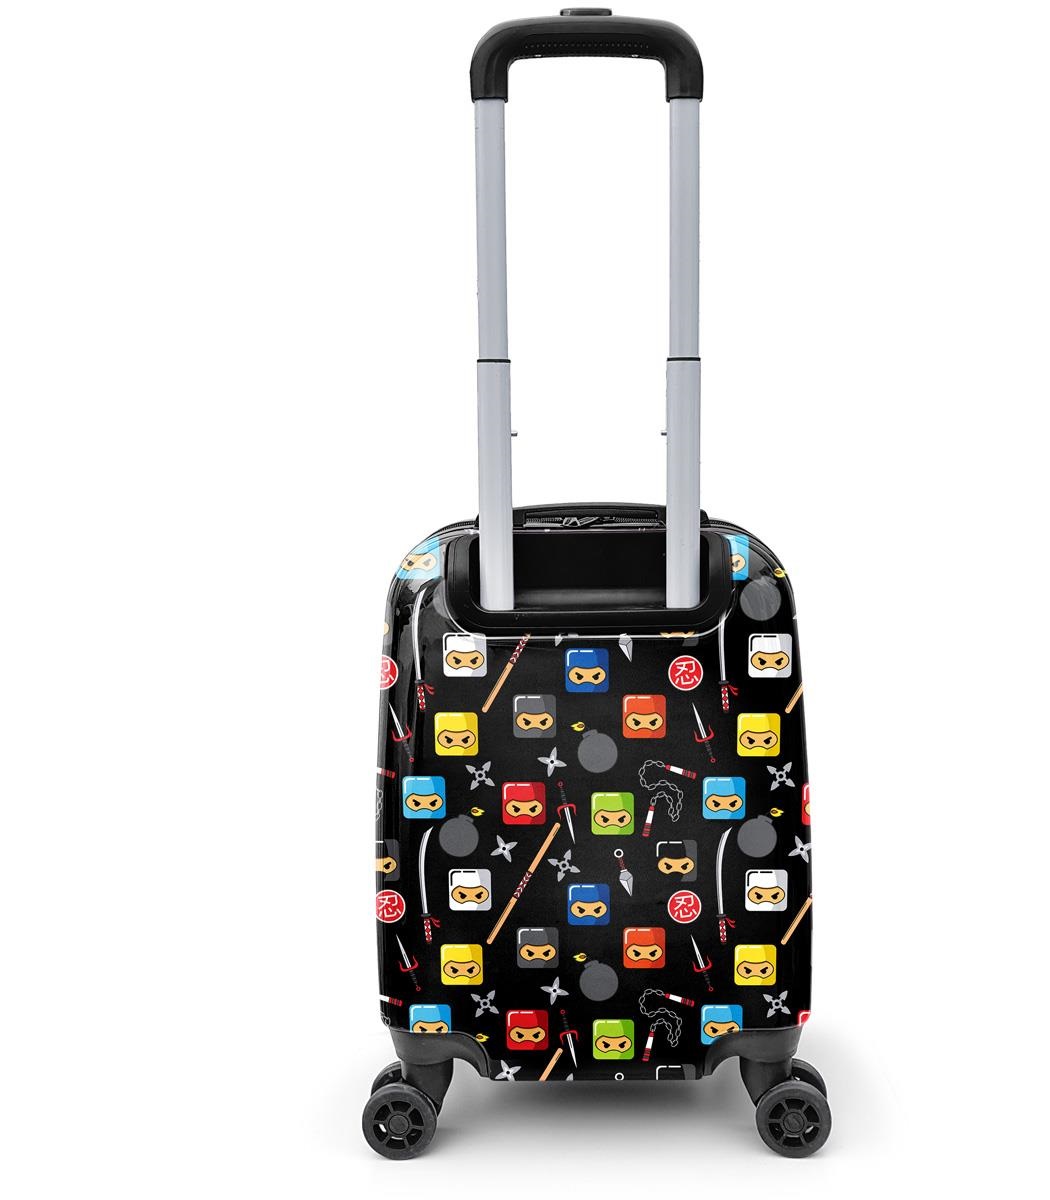 Coral High Kids Luggage suitcase - Black Ninja Patterned